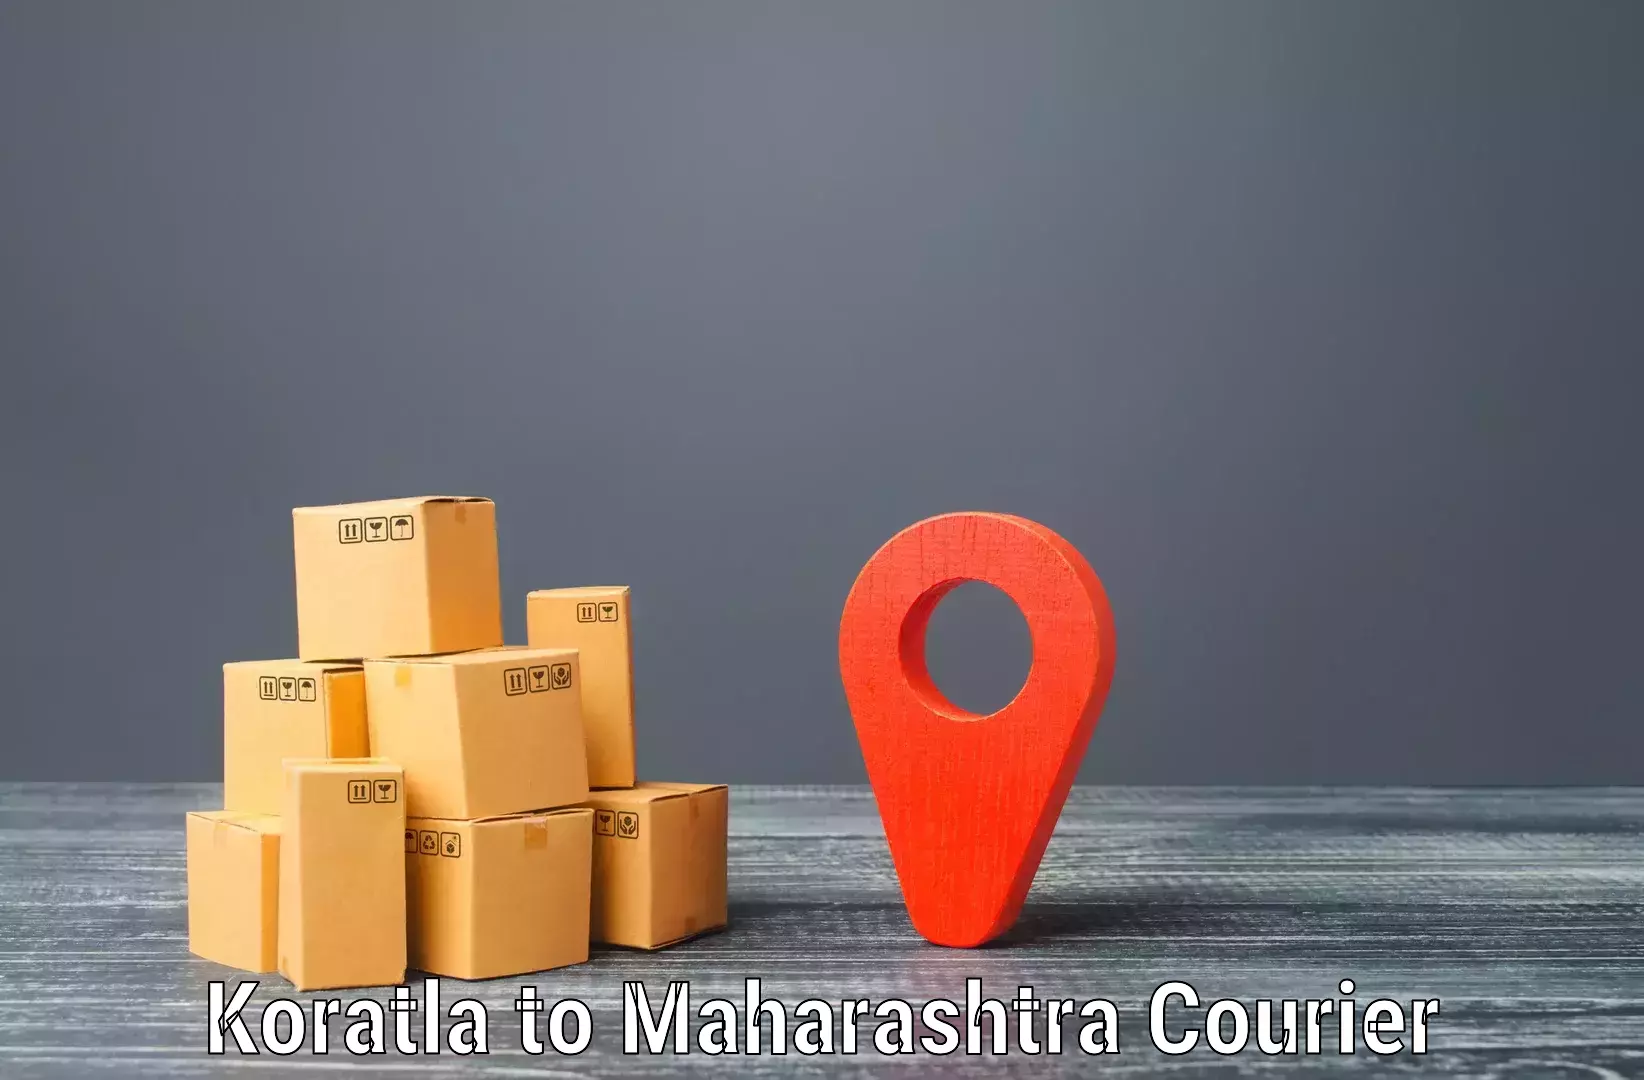 Premium delivery services in Koratla to Lonavala